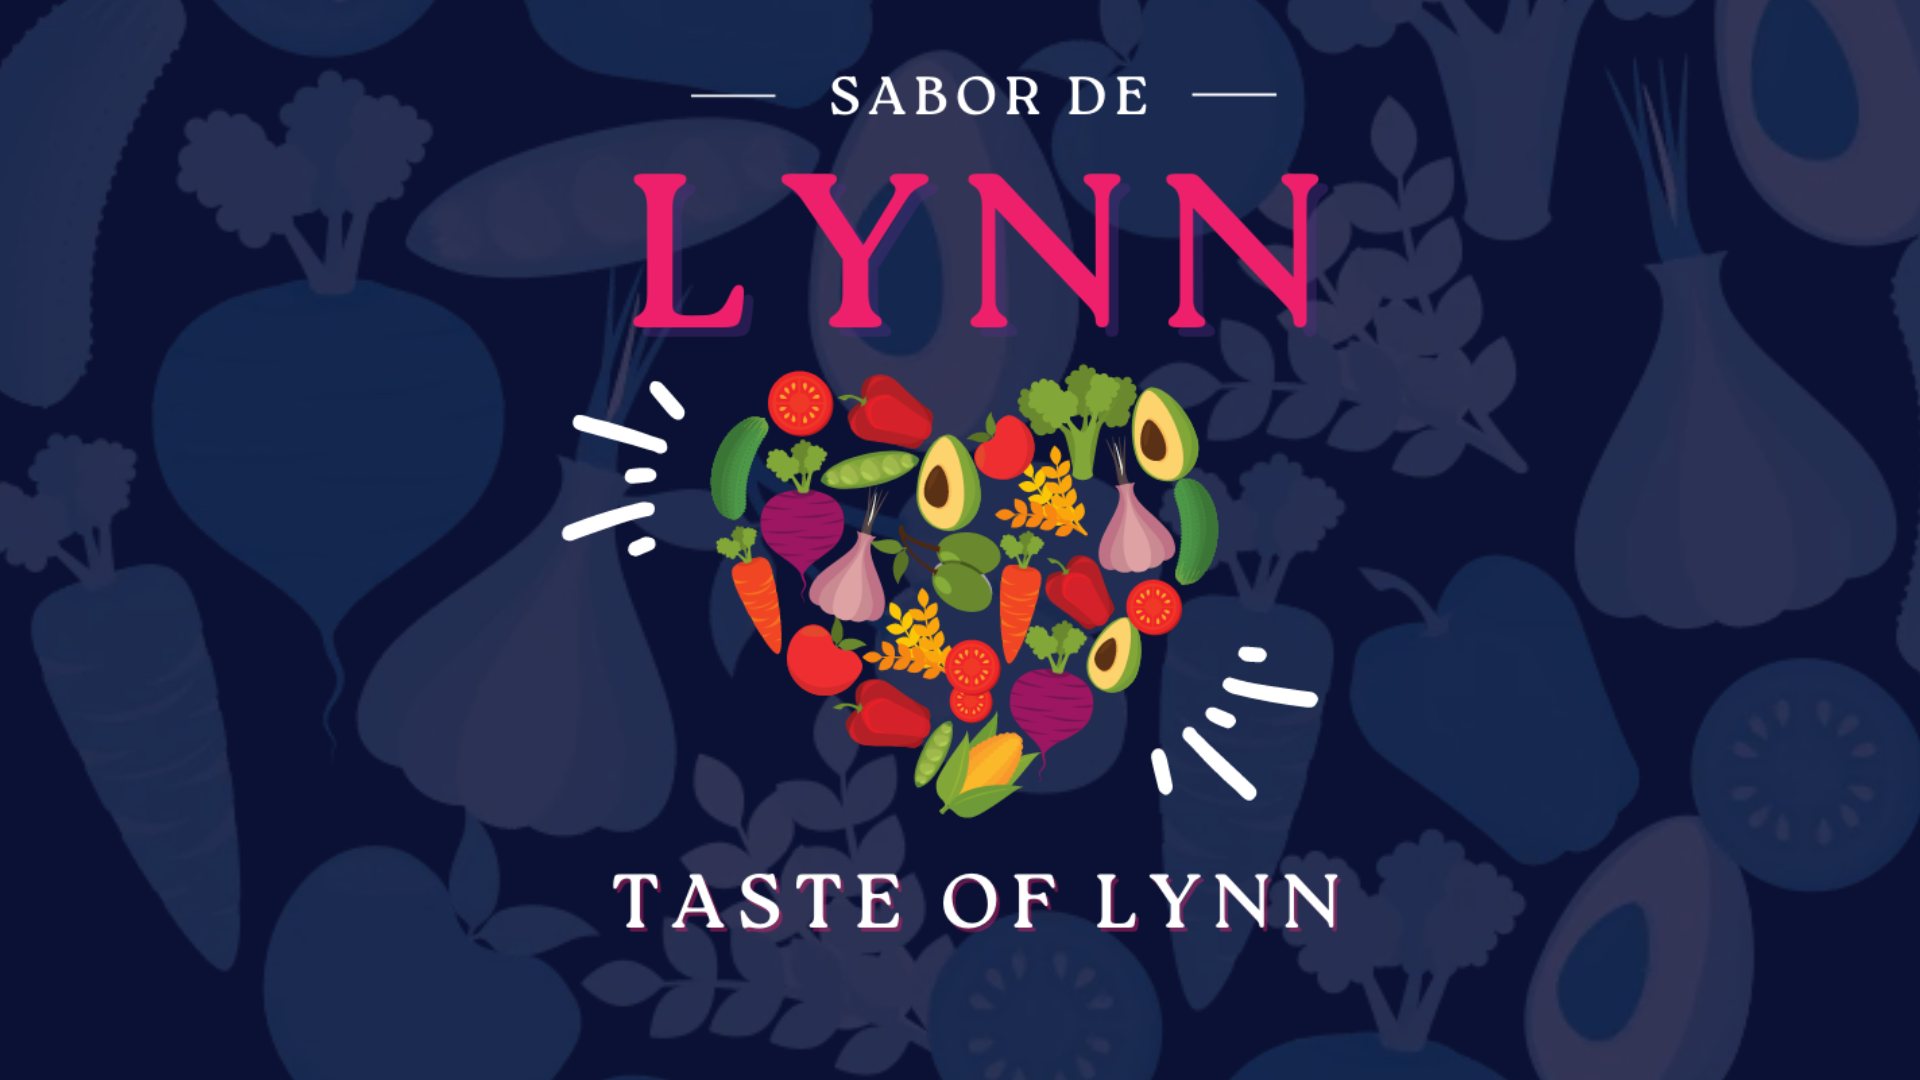 a poster for a taste of lynn/ sabor de lynn restaurant week